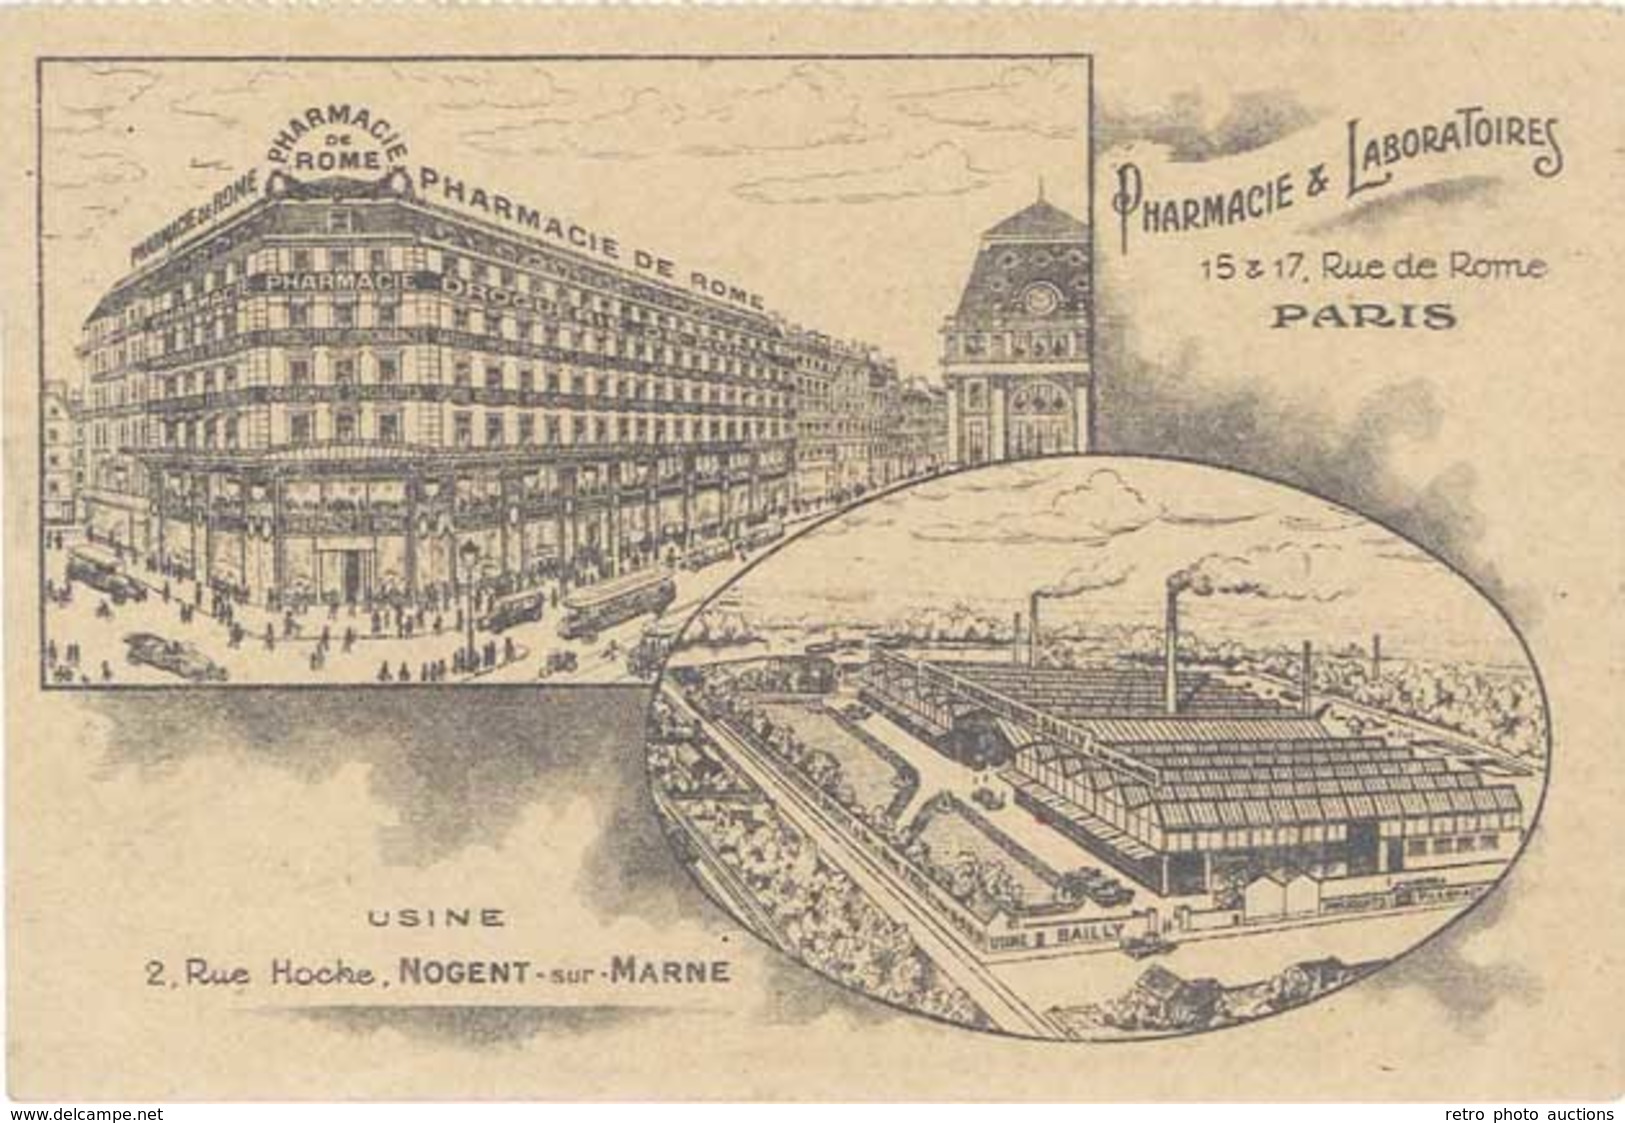 TB Pharmacie De Rome, Pharmacie & Laboratoires, Paris - Werbepostkarten